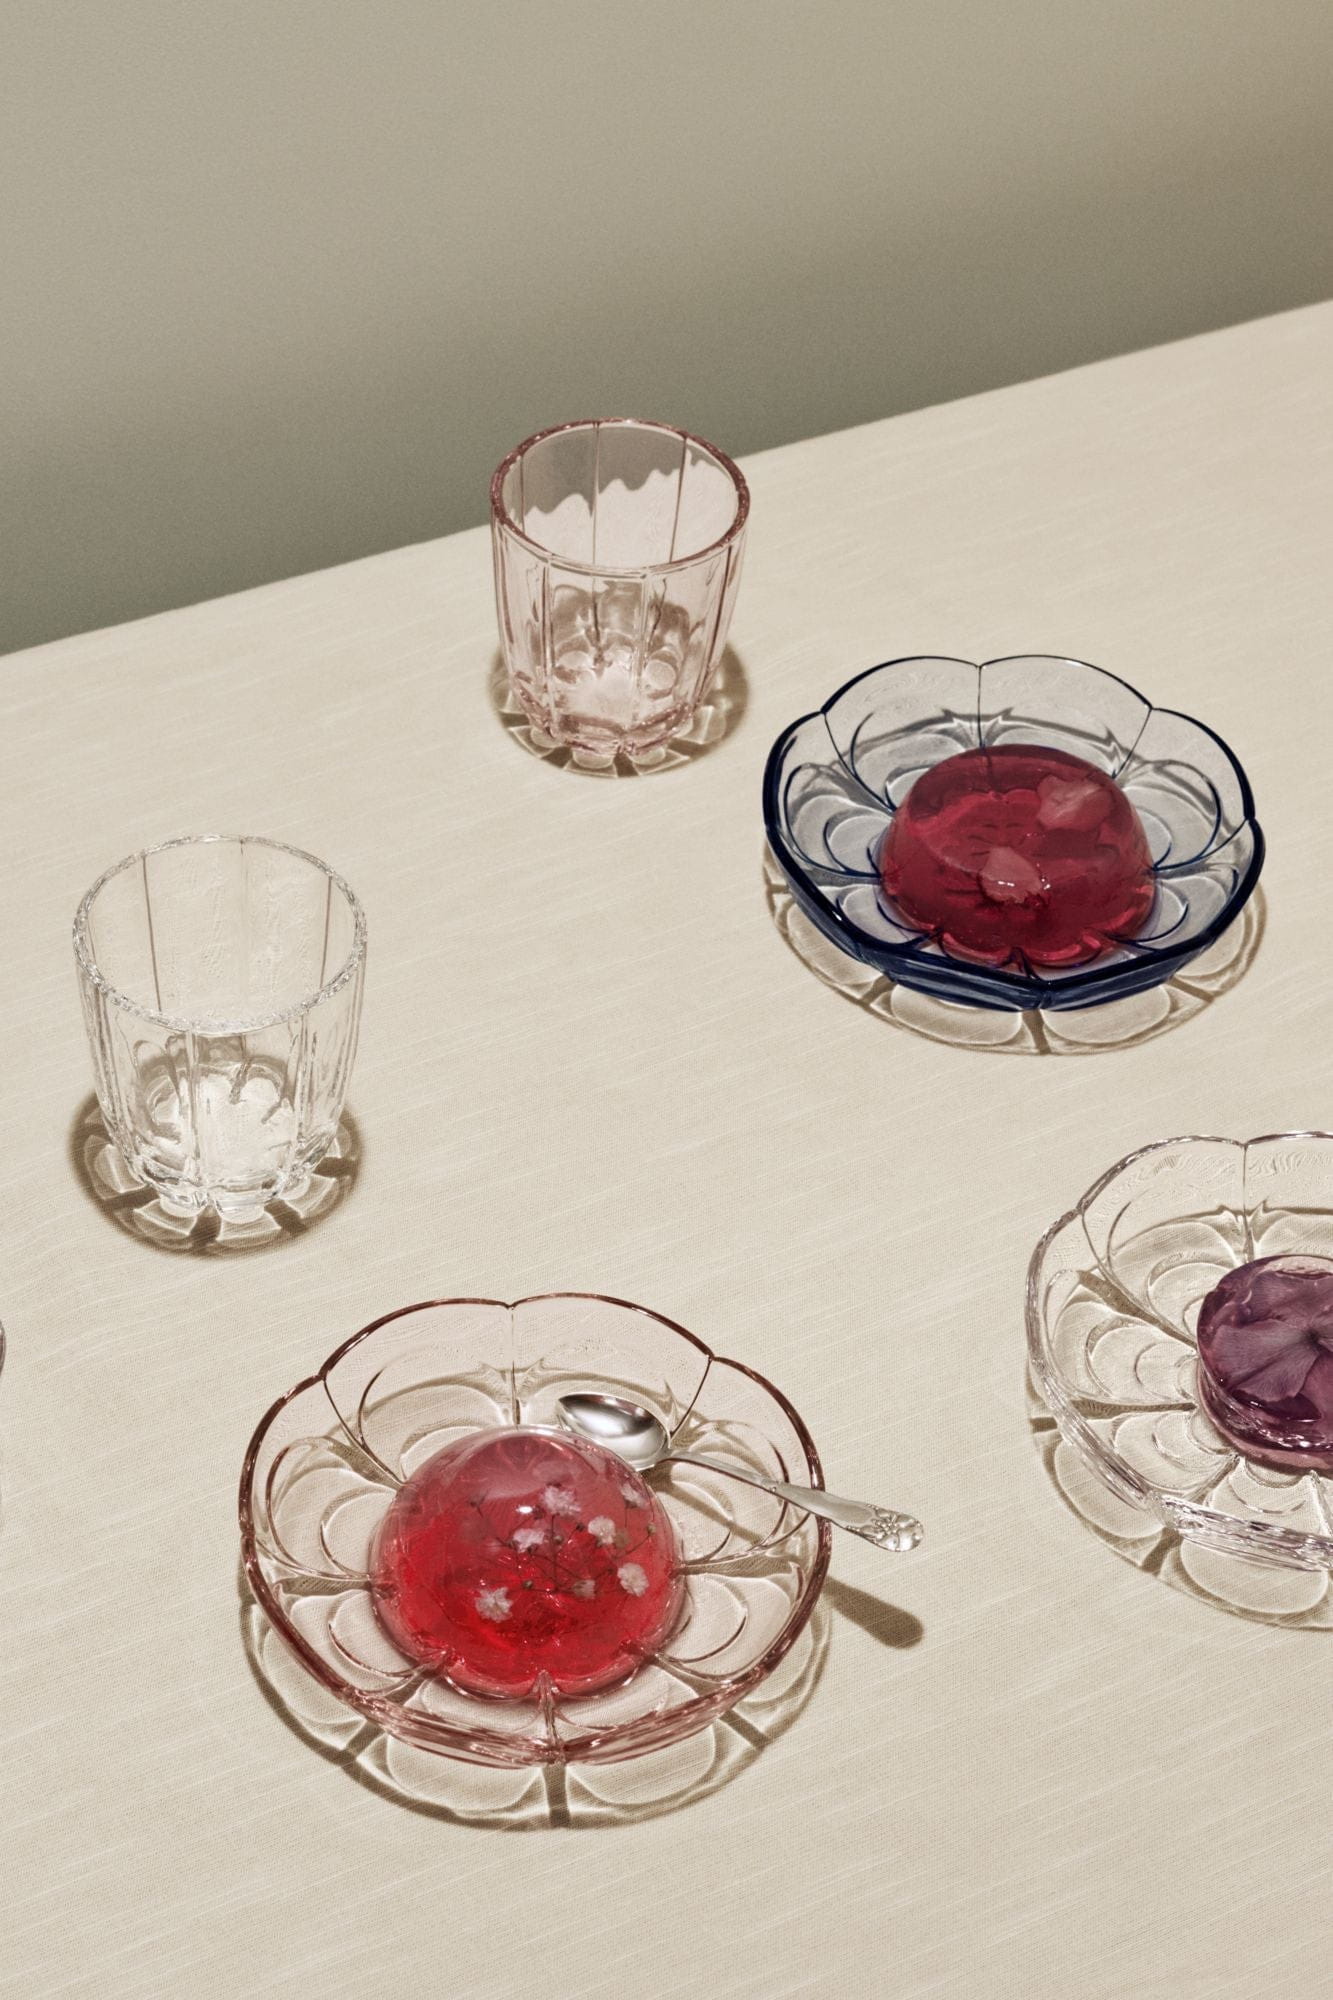 Holmegaard Lily Water Glass Set de 2 320 ml, rose